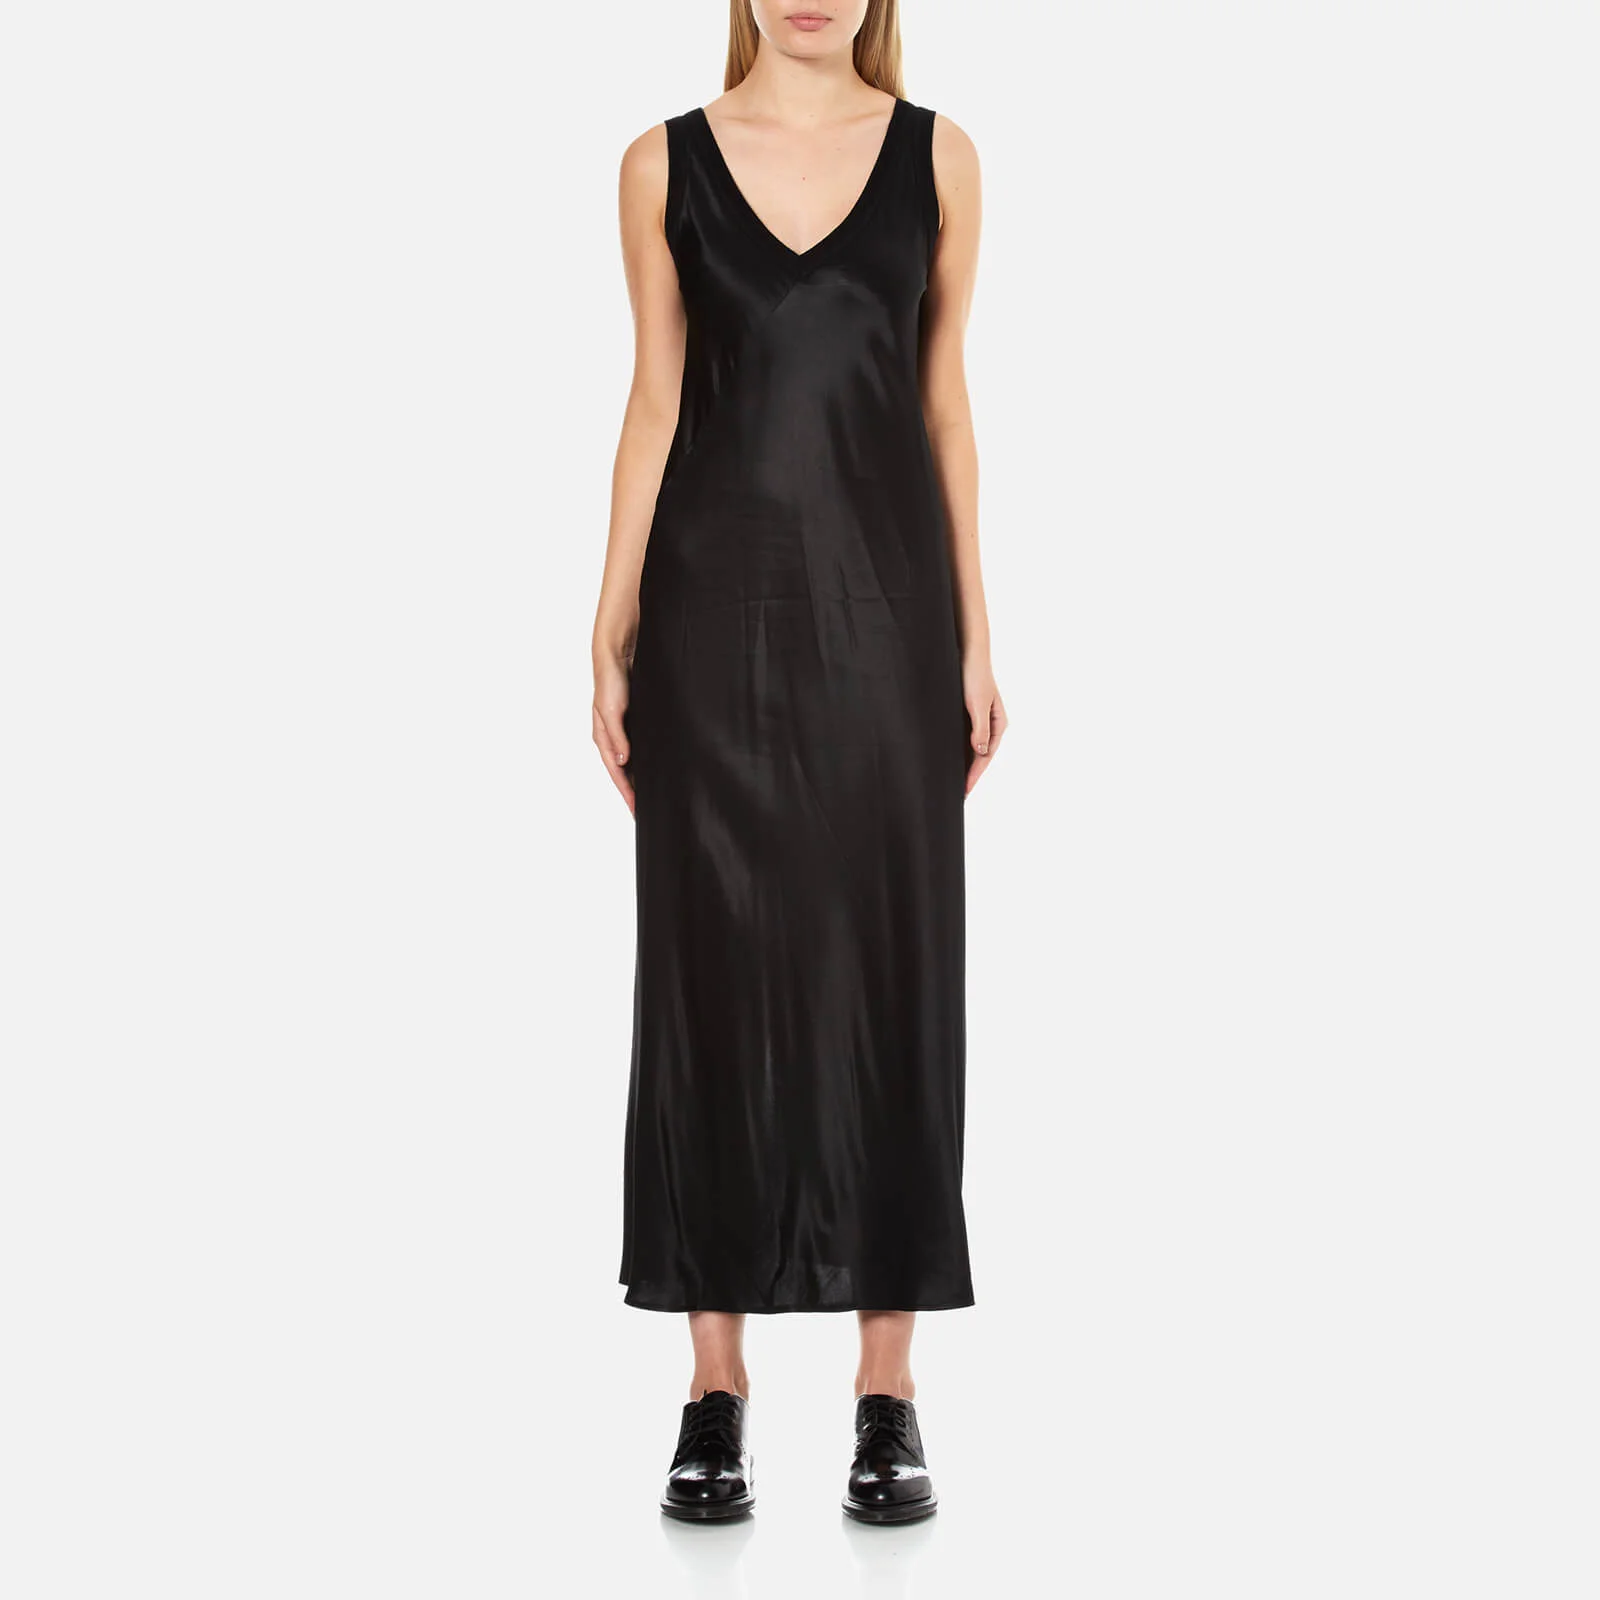 DKNY Women's Sleeveless V-Neck Slip Dress with Ribbed Trims and Back Slit - Black Image 1